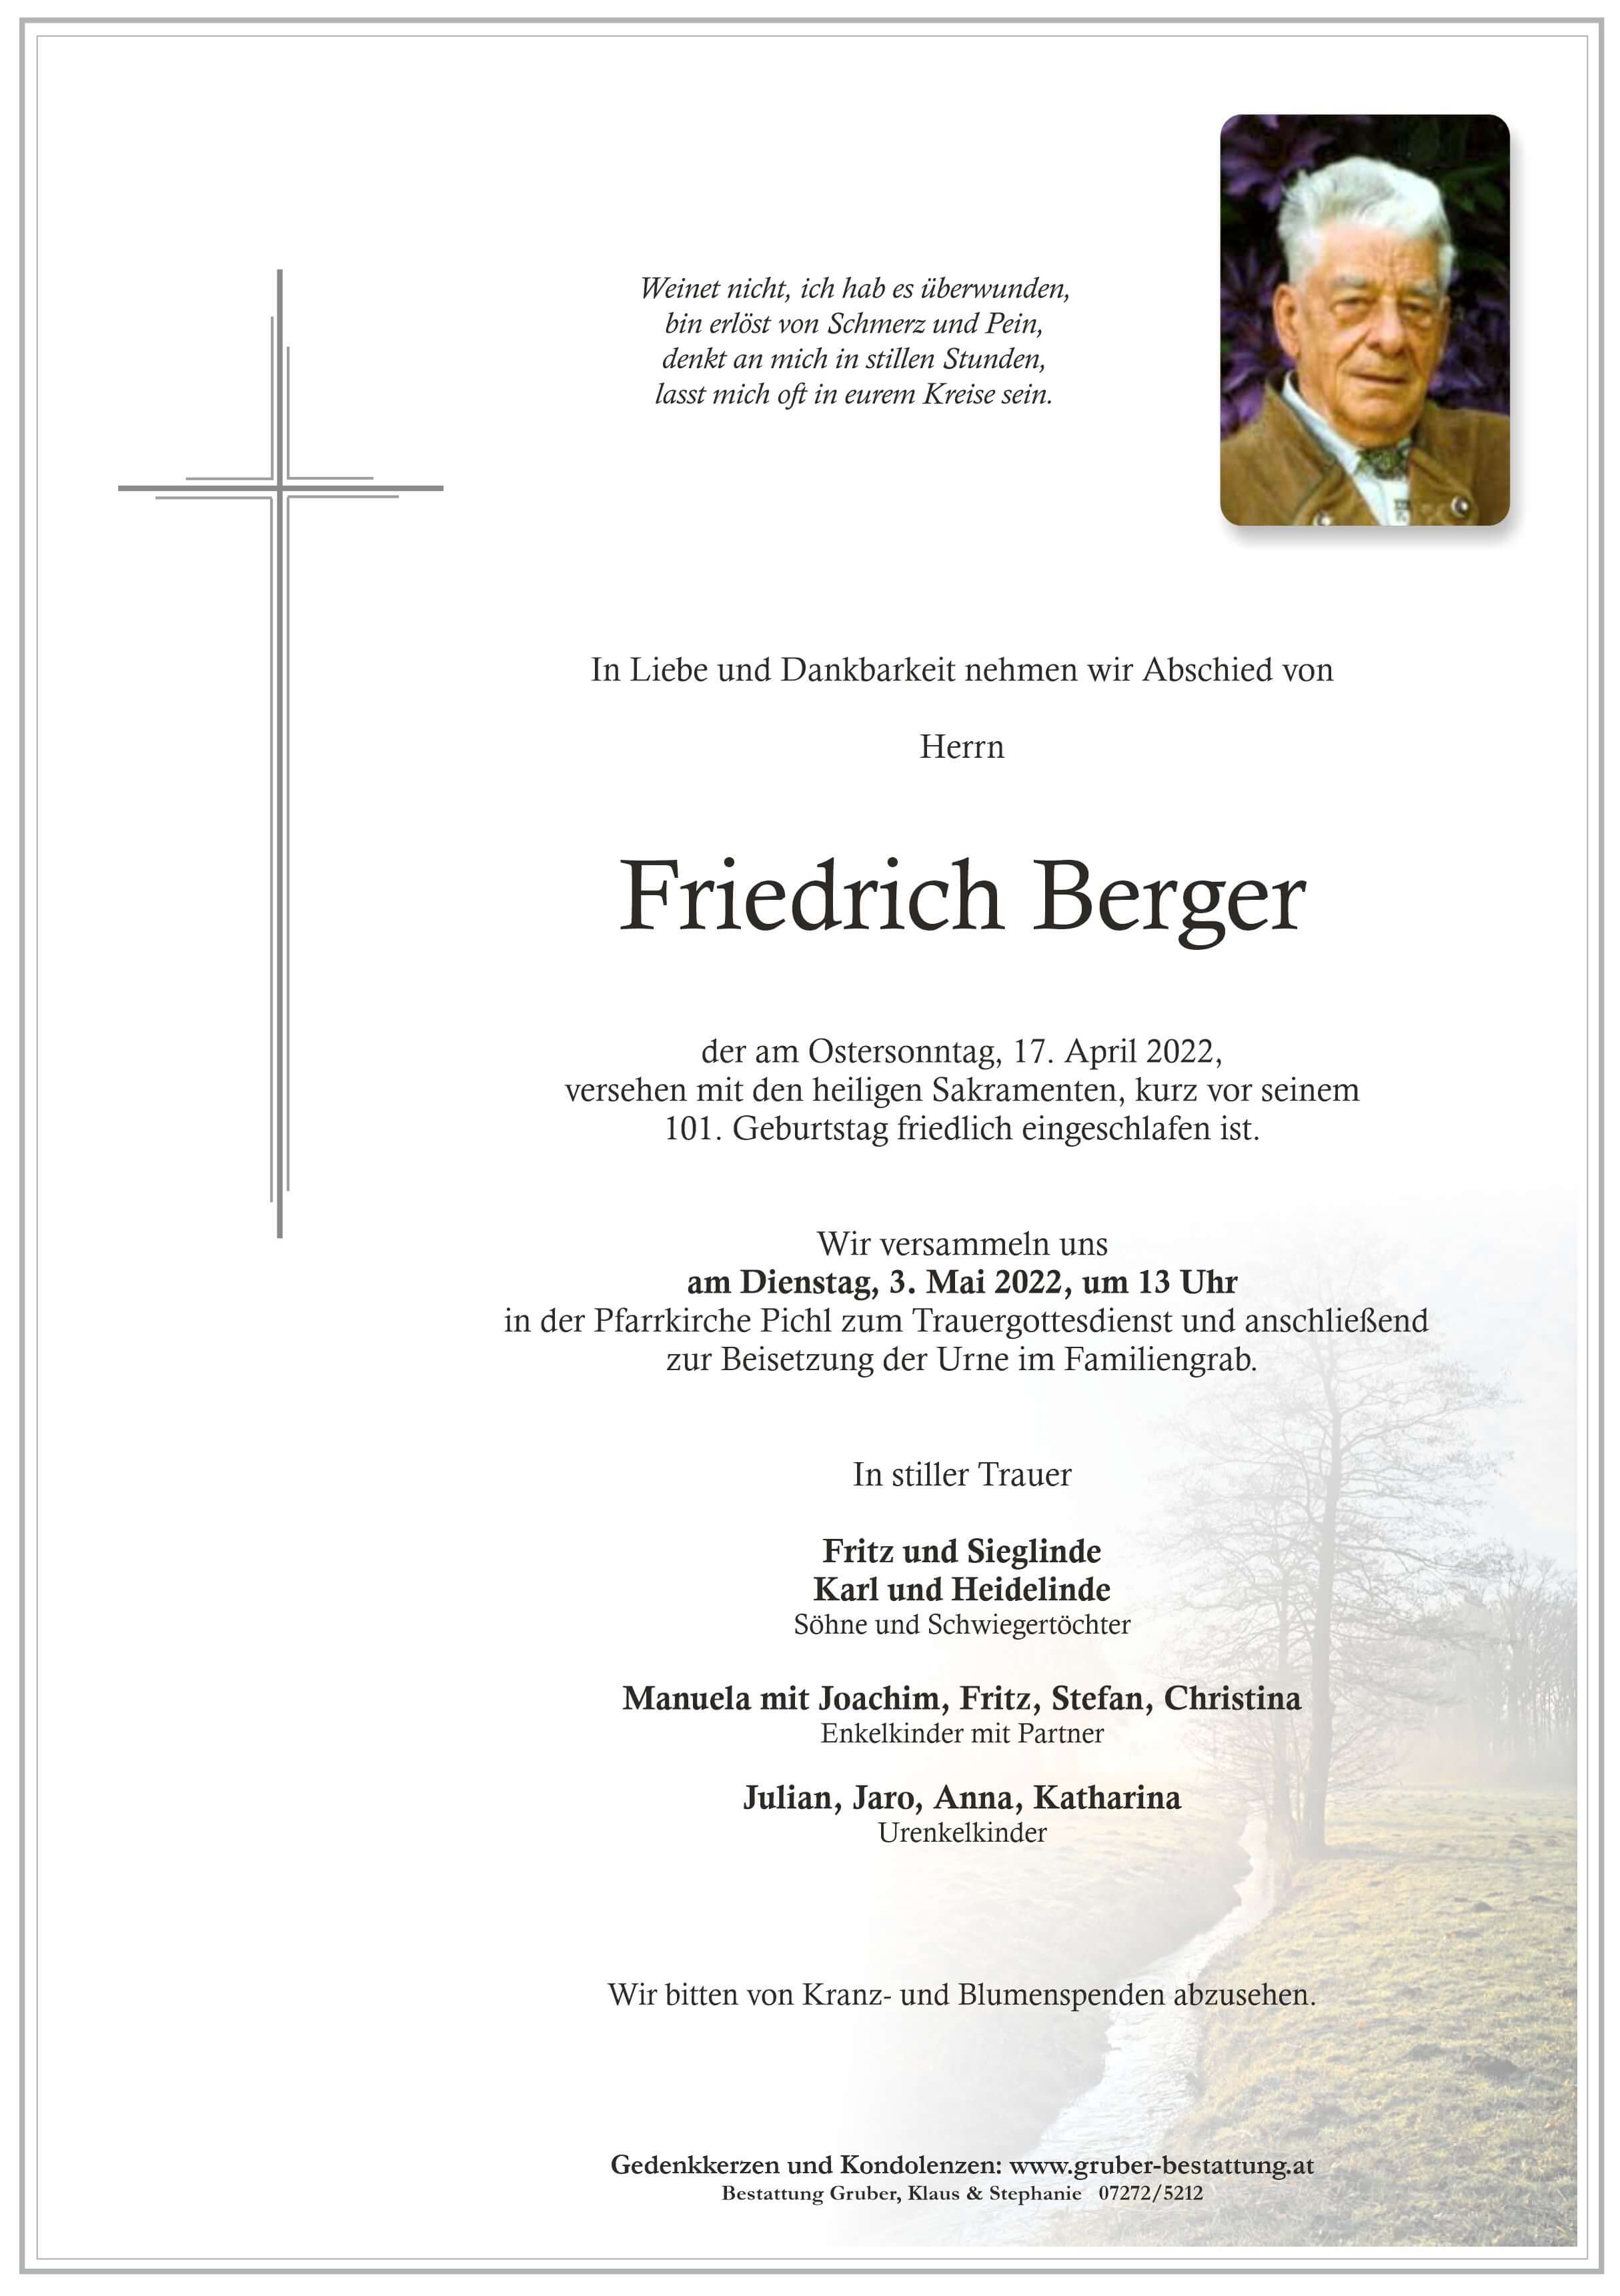 Friedrich Berger (Pichl)